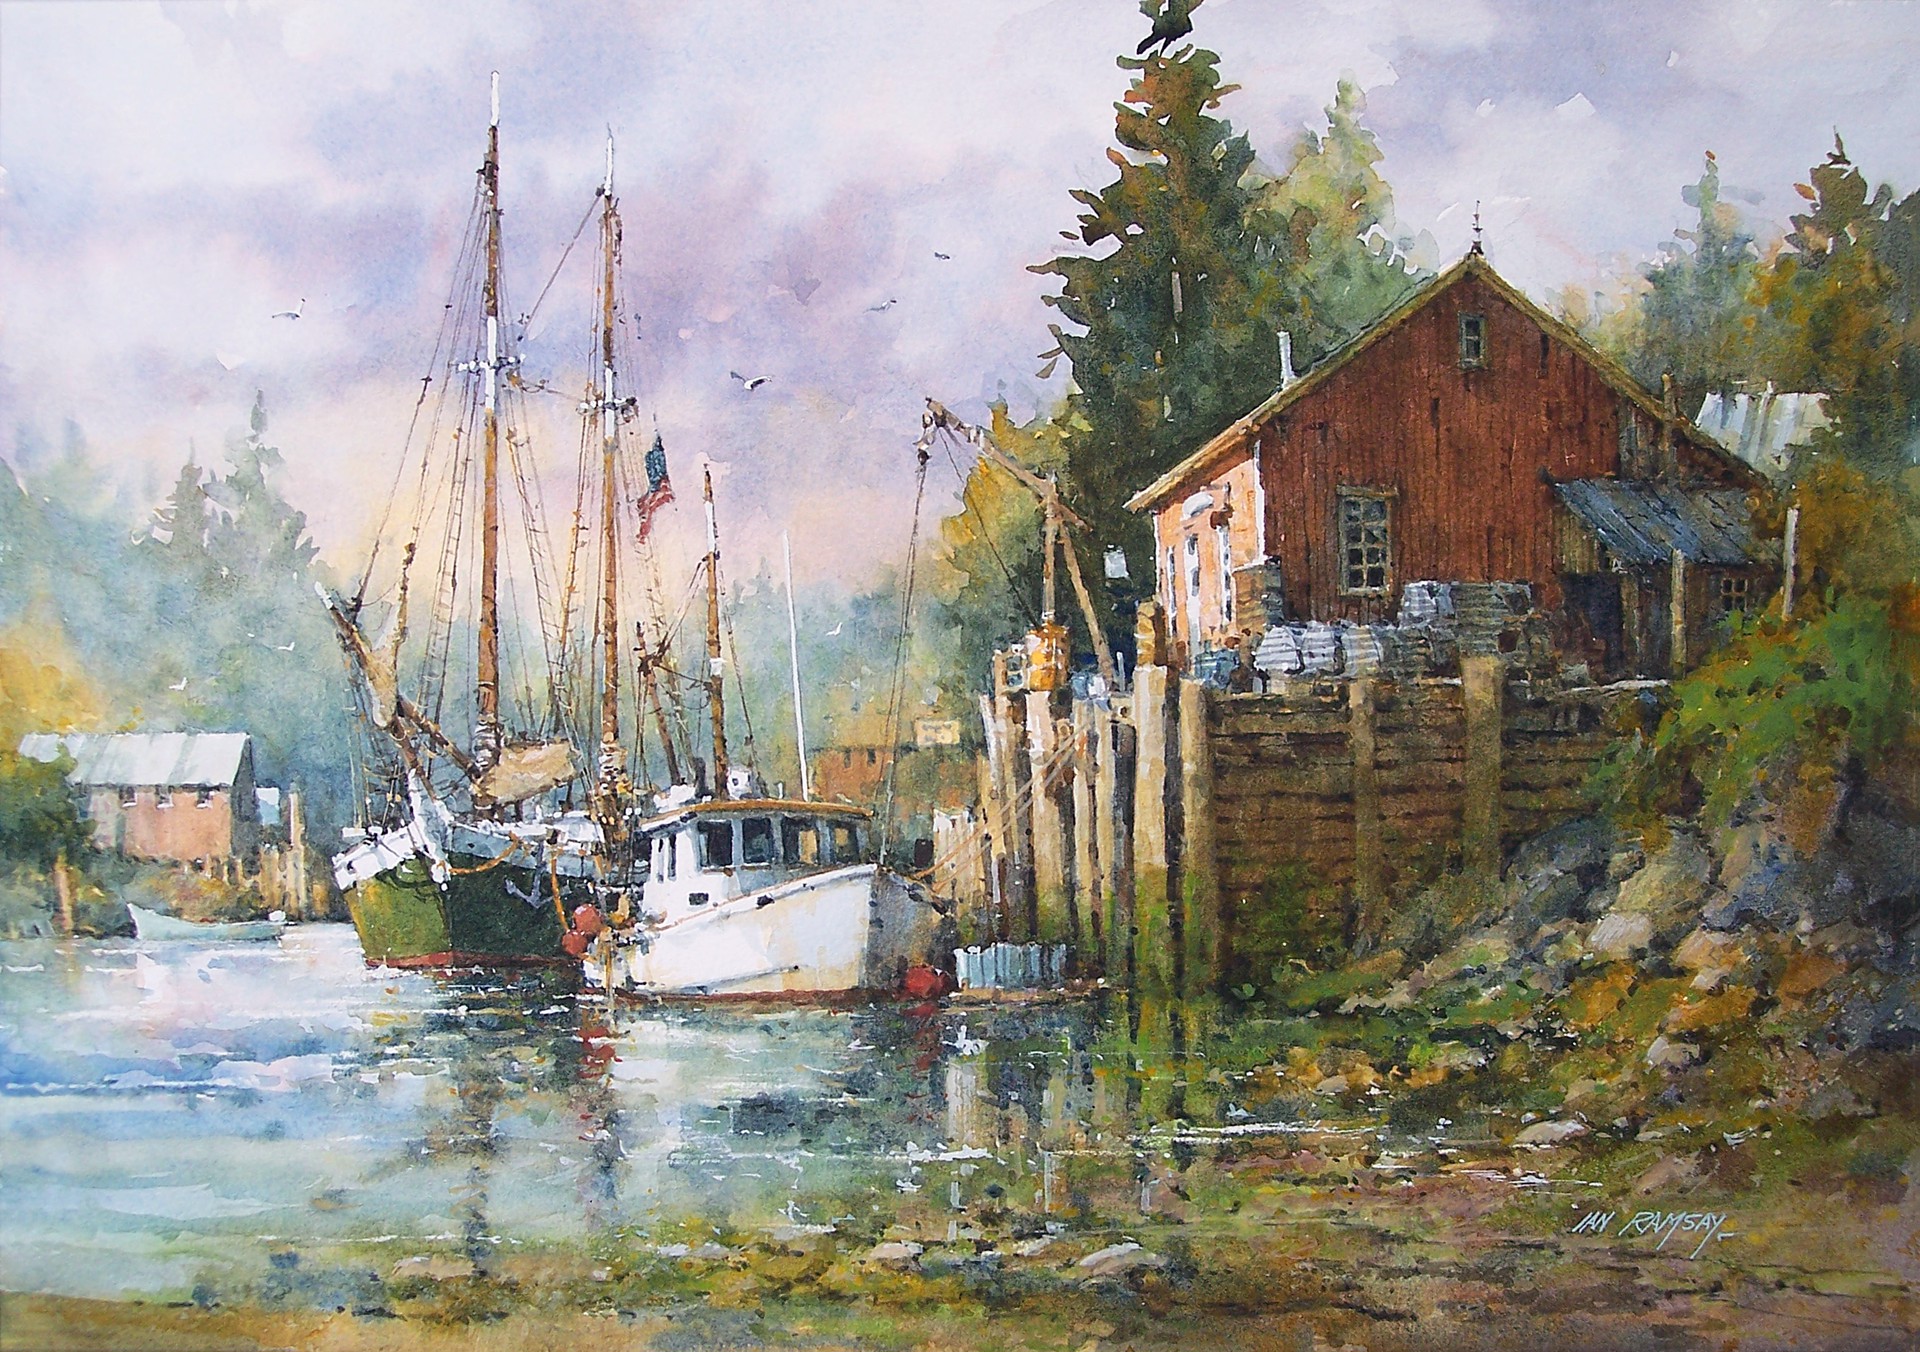 Penobscot River Dock by Ian Ramsay